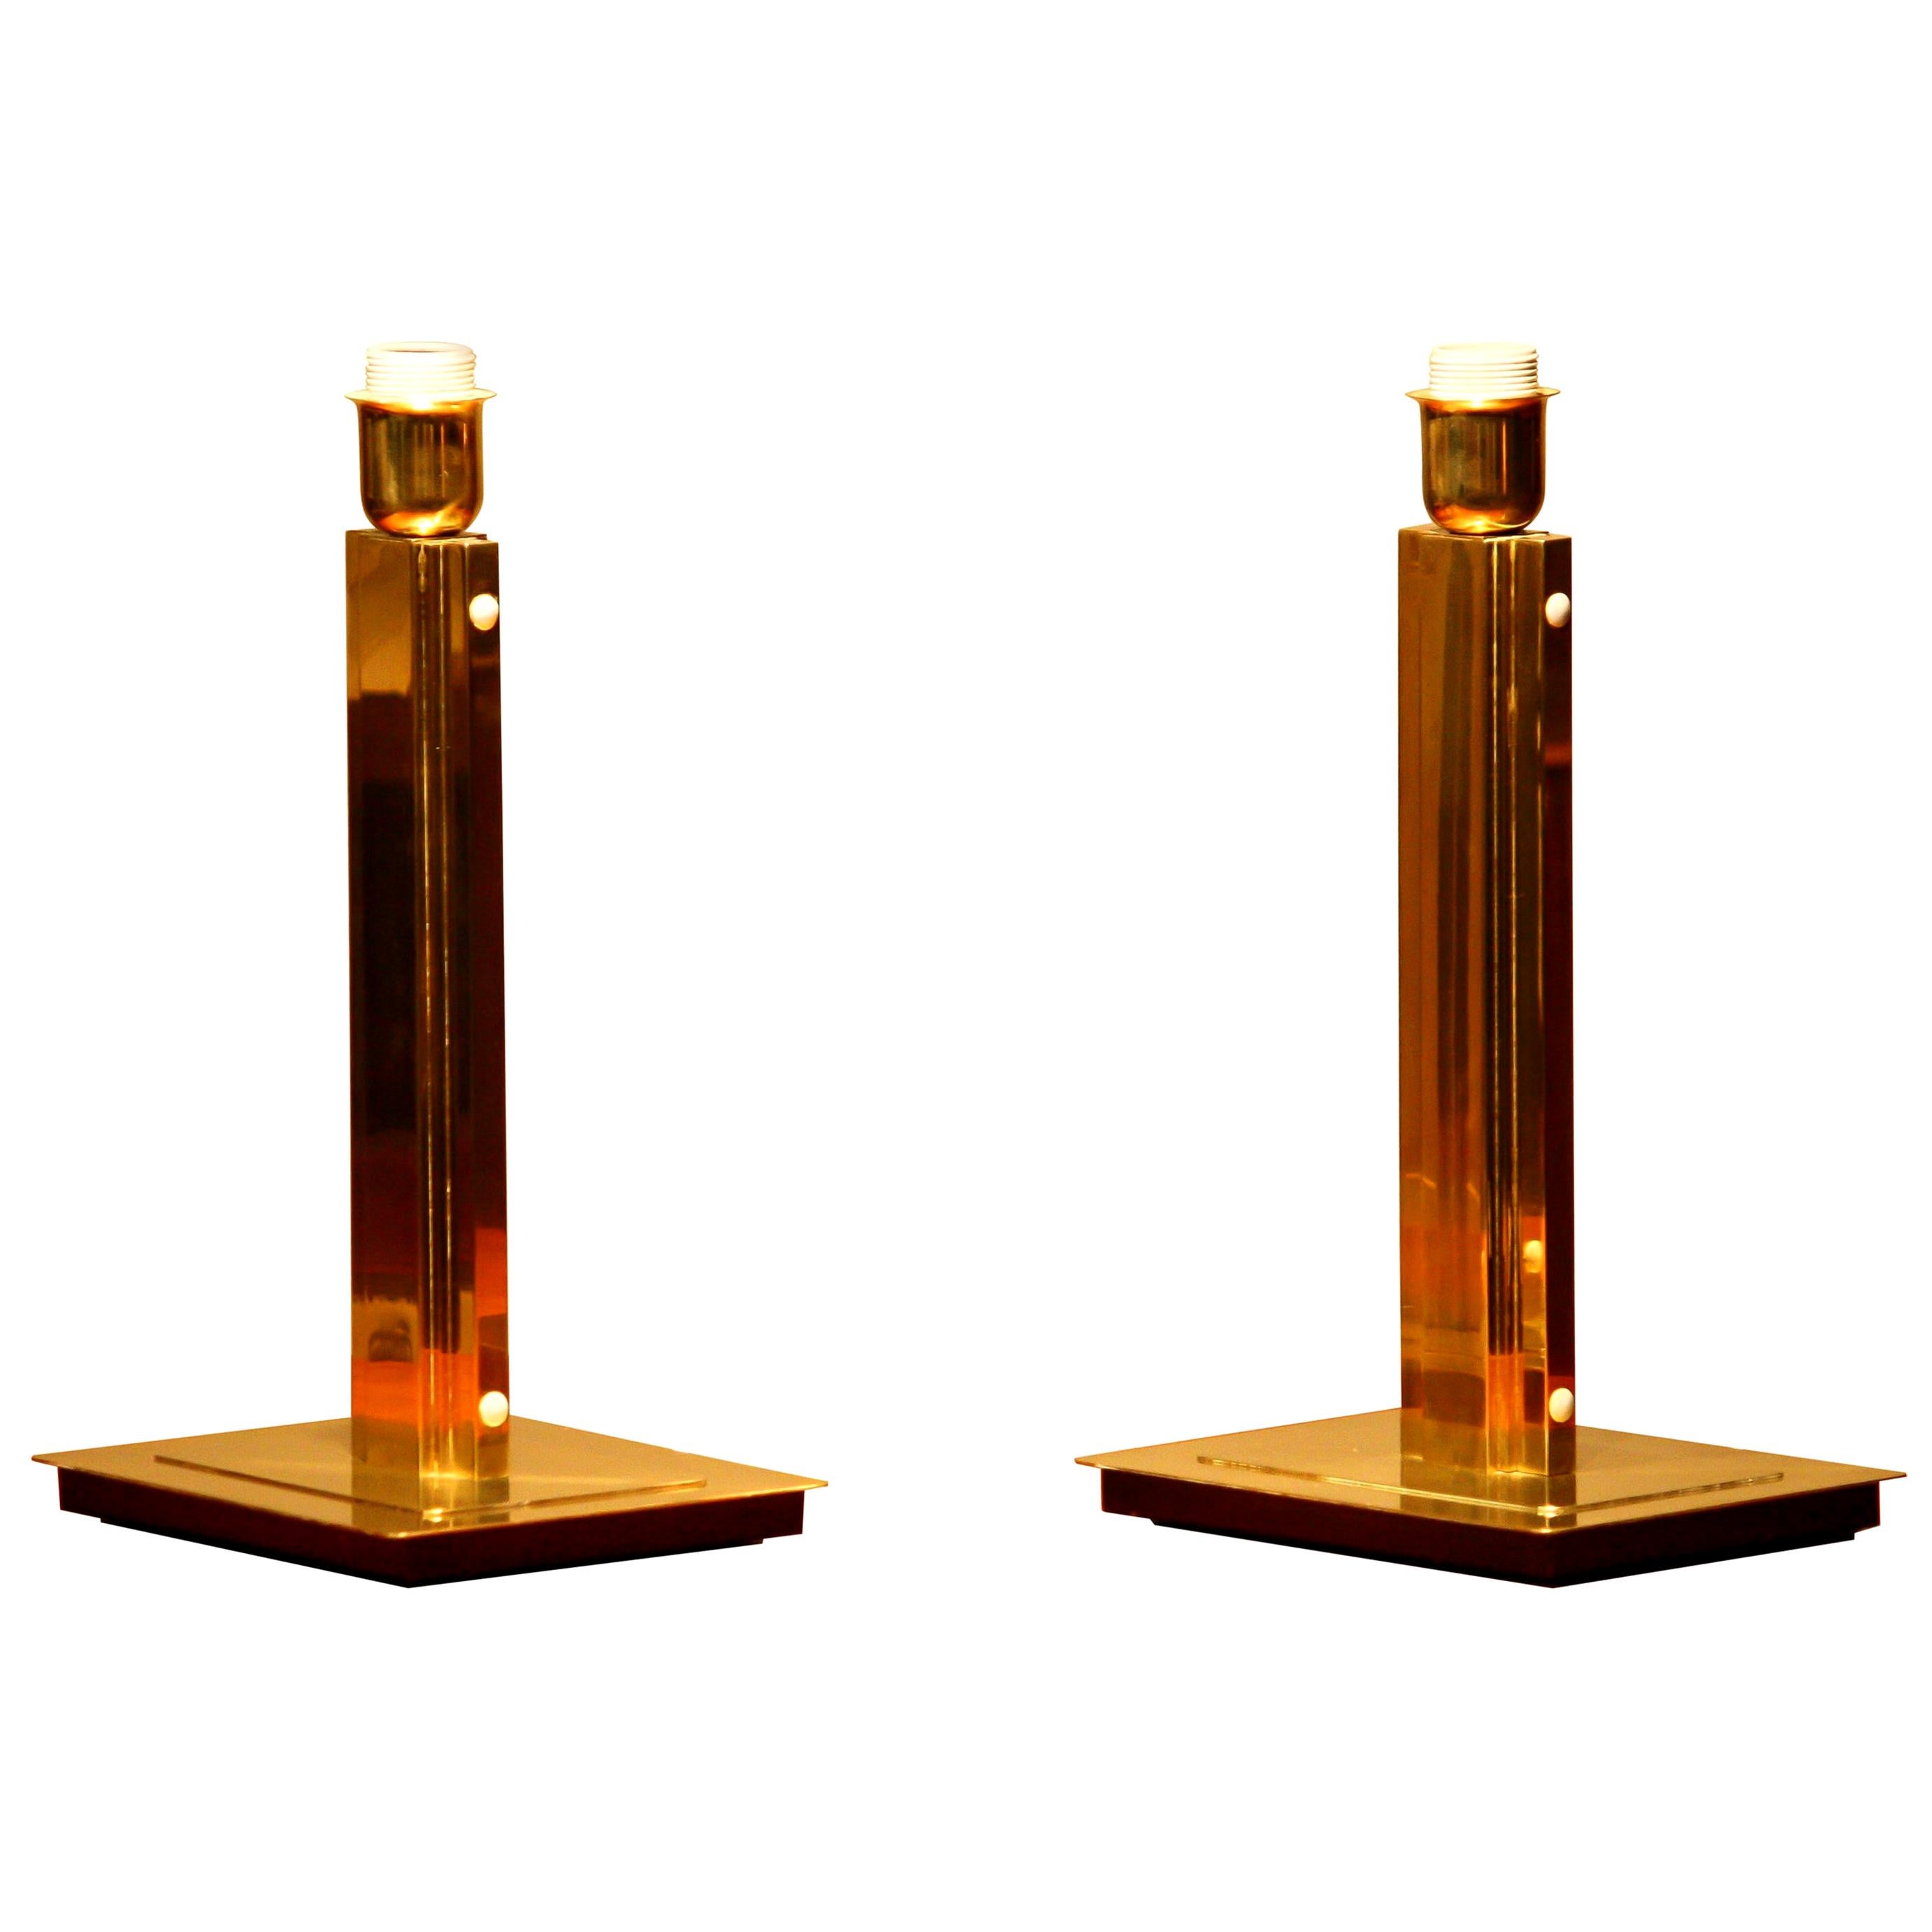 1960s, Set of Two Hollywood Regency Brass Table Lamps by Örsjö, Sweden